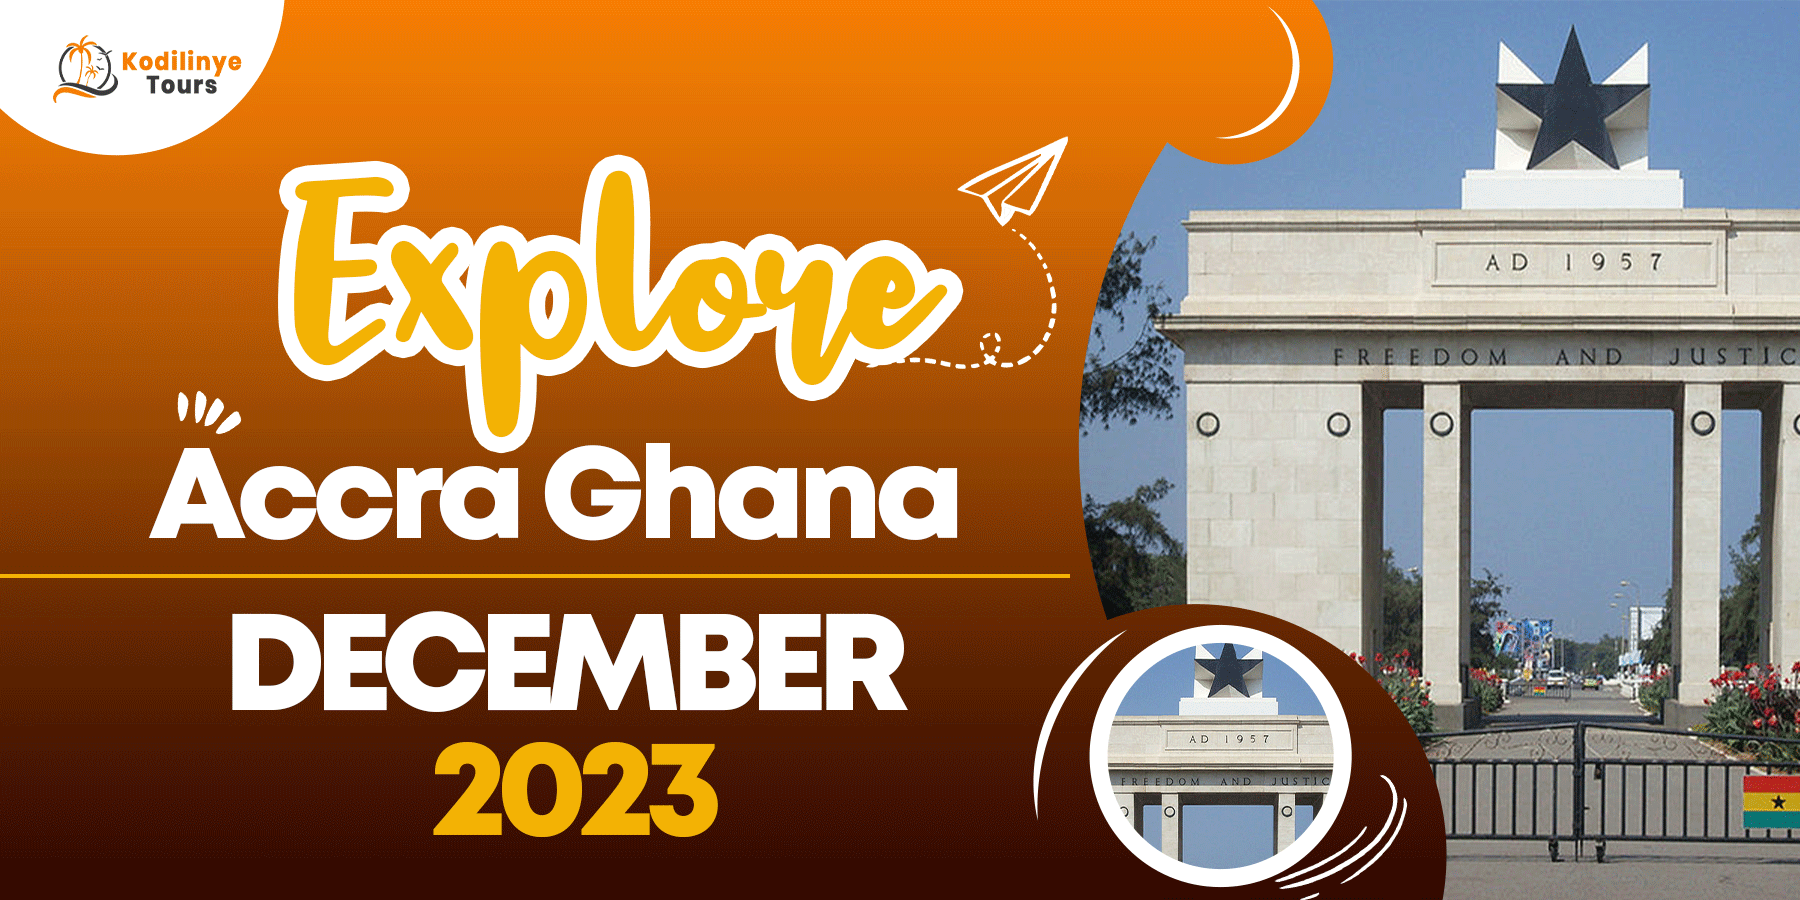 Explore Accra Ghana December 2023